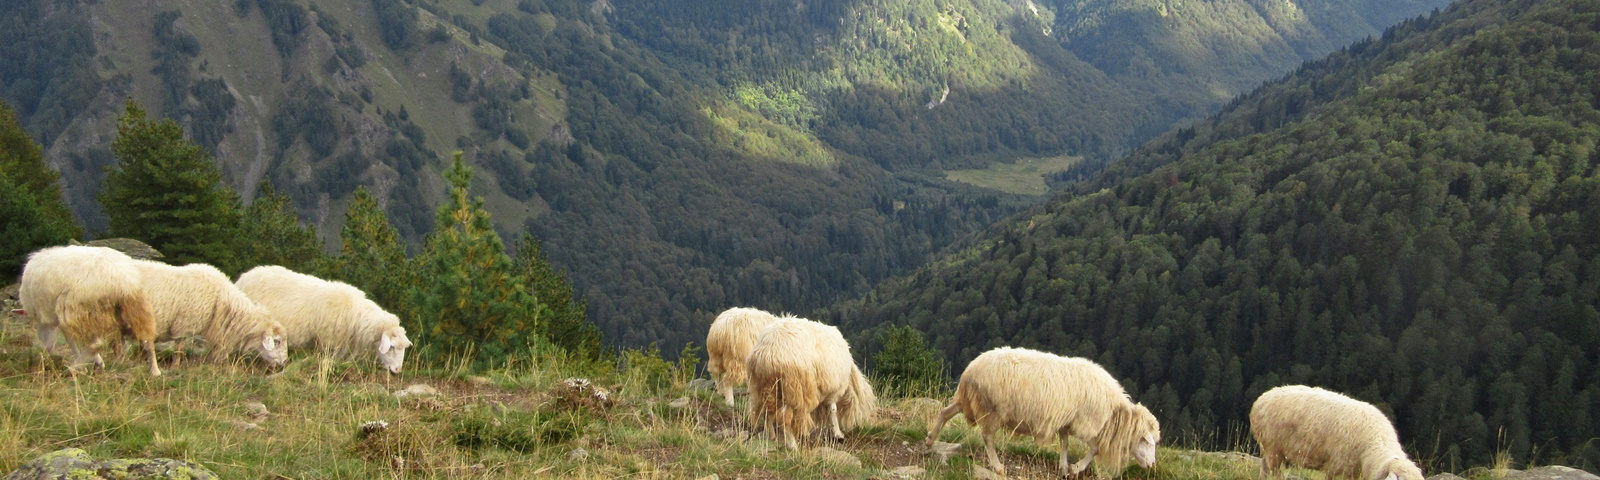 Peaks of the Balkans Albanien Bergwiese Schafe